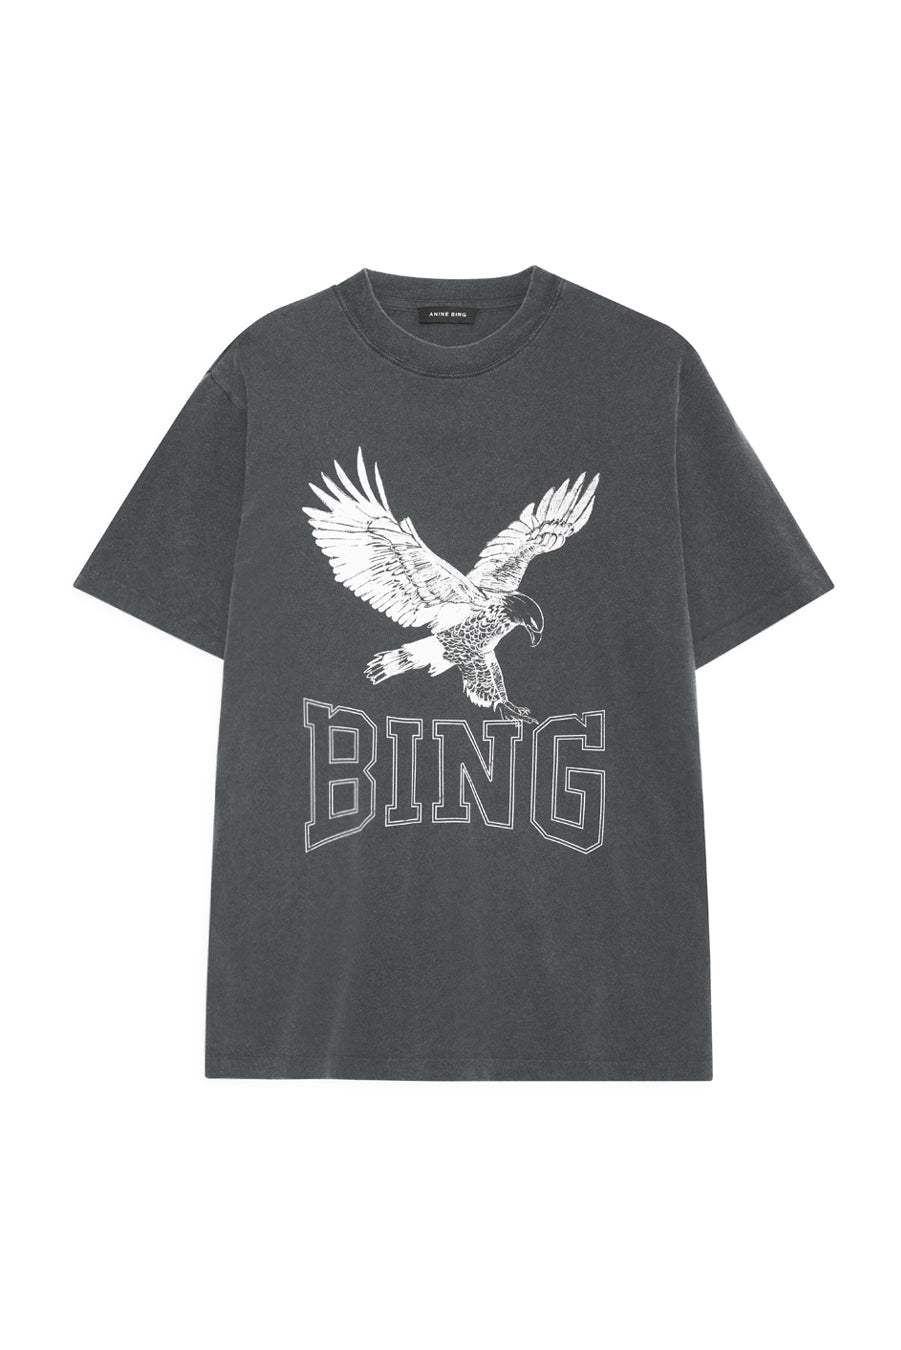 Anine Bing - Lili Tee Retro Eagle in Washed Black